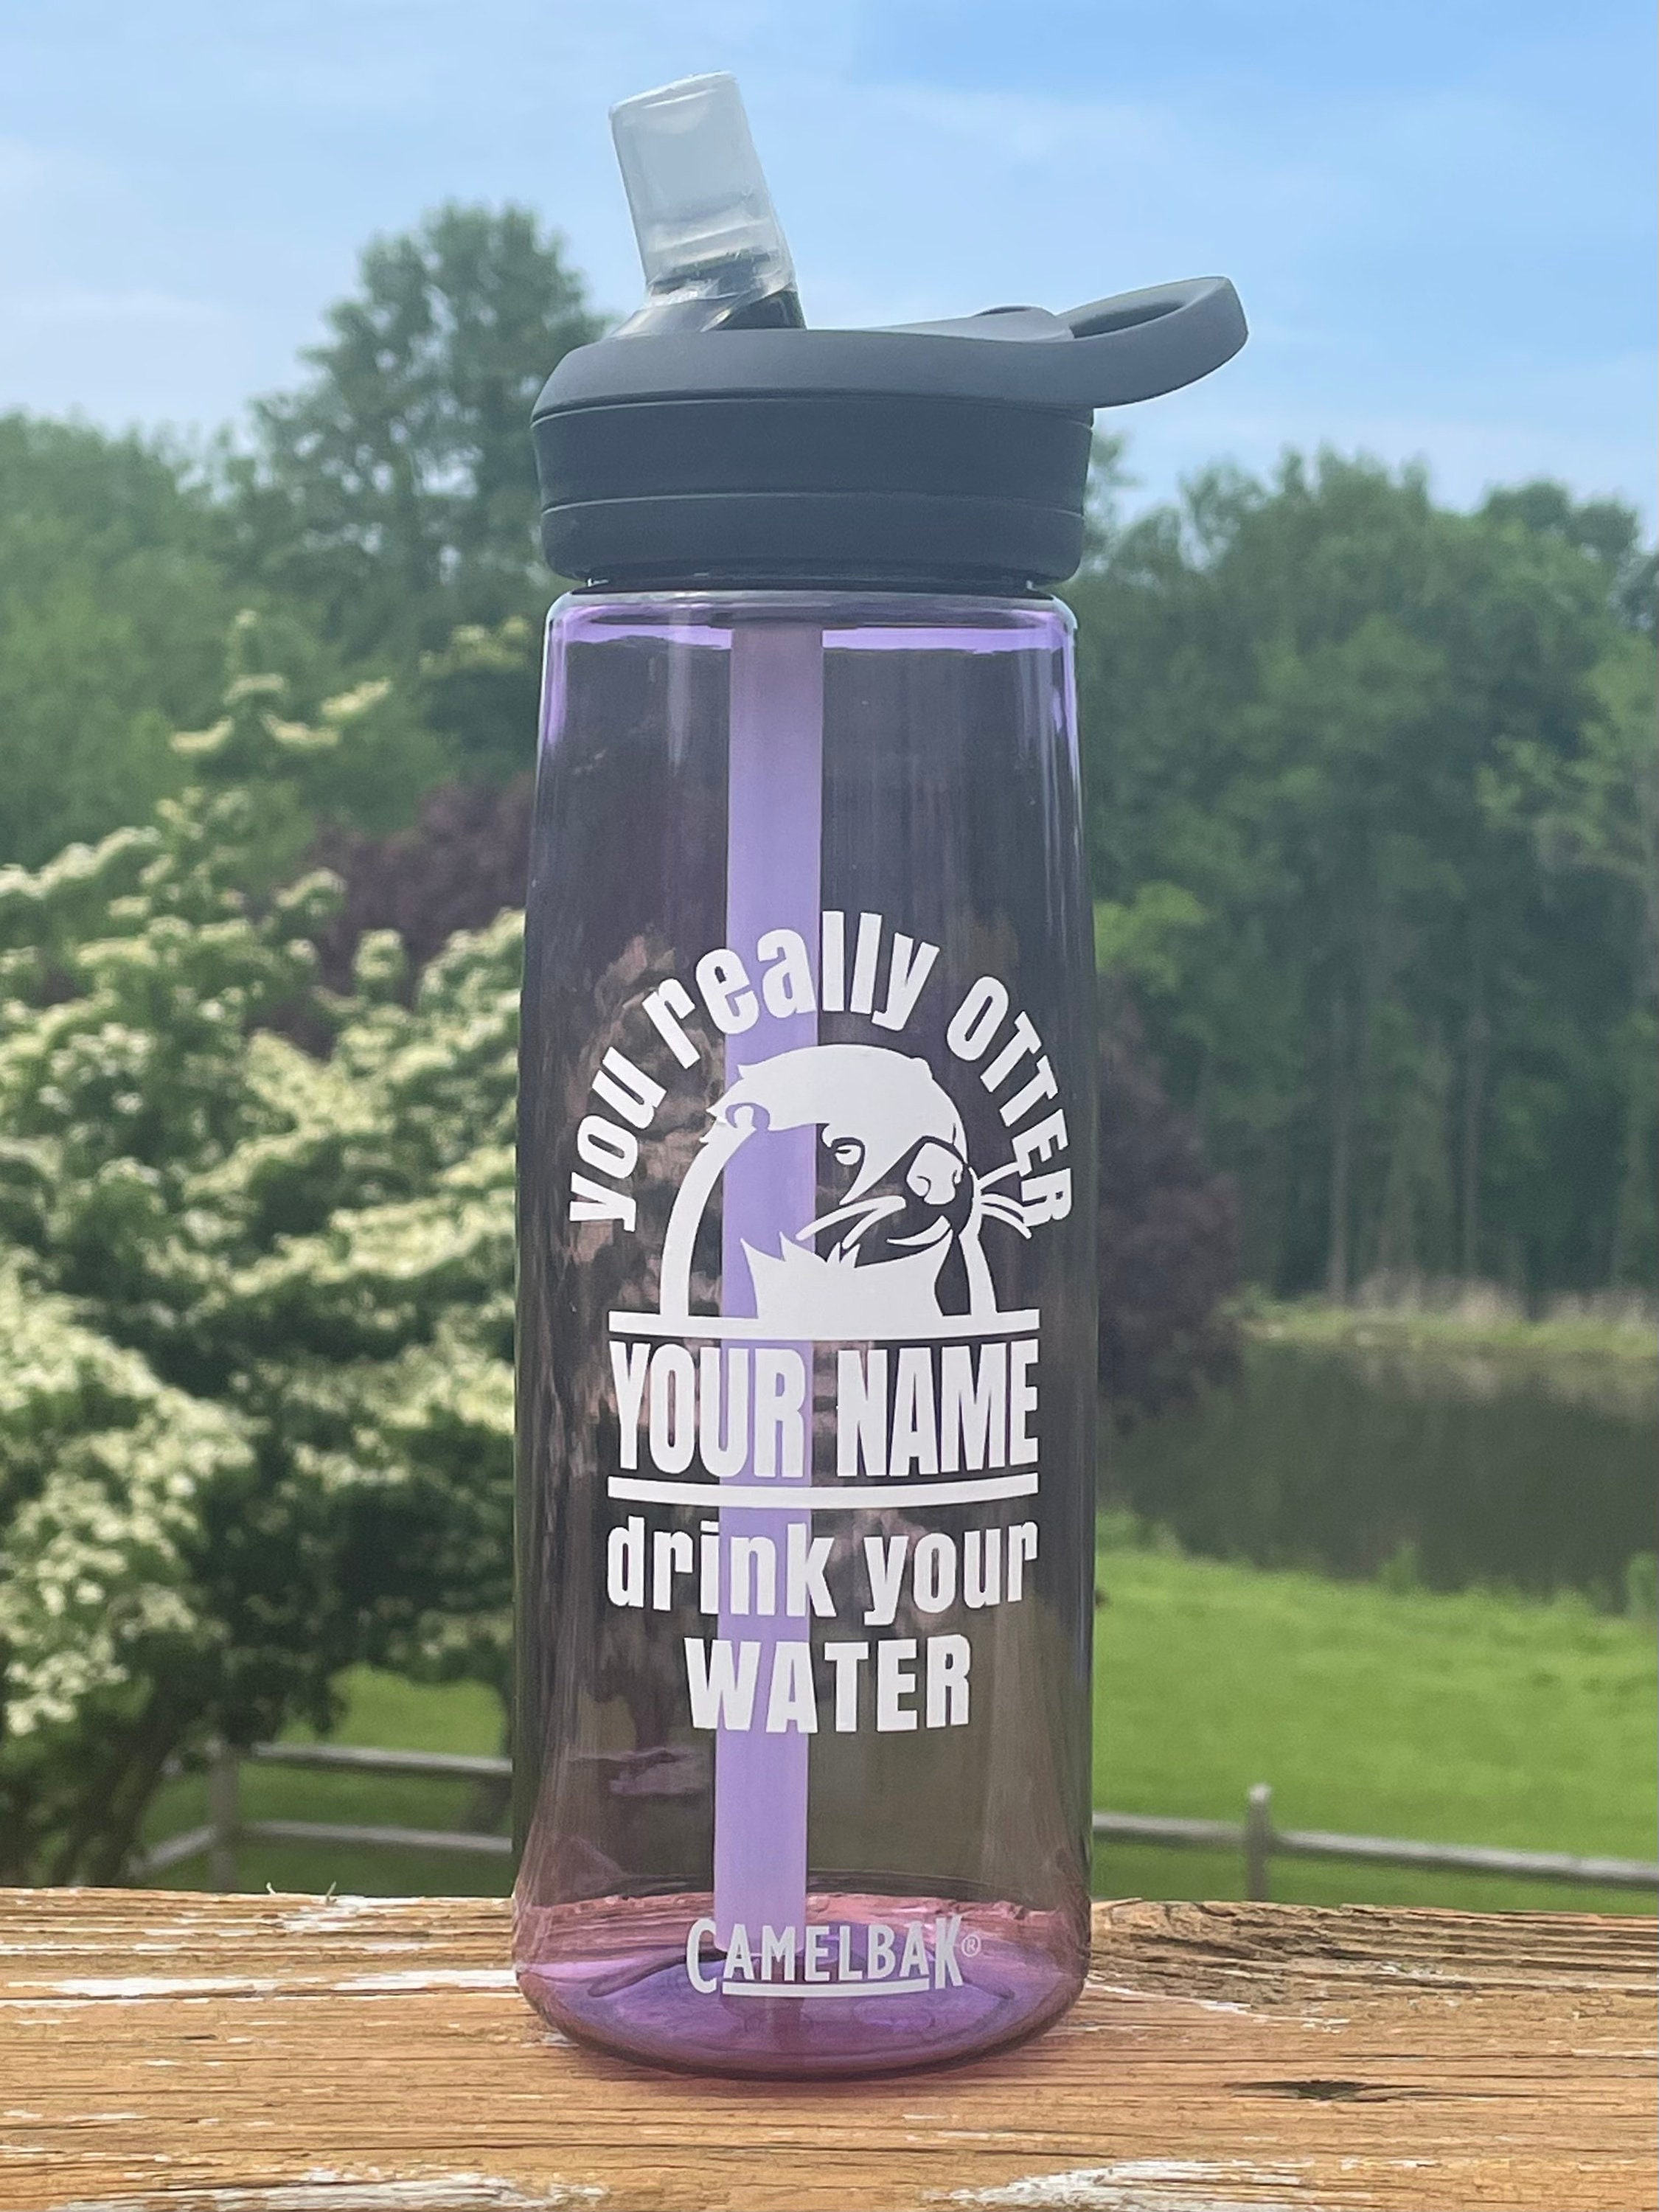 CamelBak 25oz Eddy+ Vacuum Insulated Stainless Steel Water Bottle - Pastel  Purple